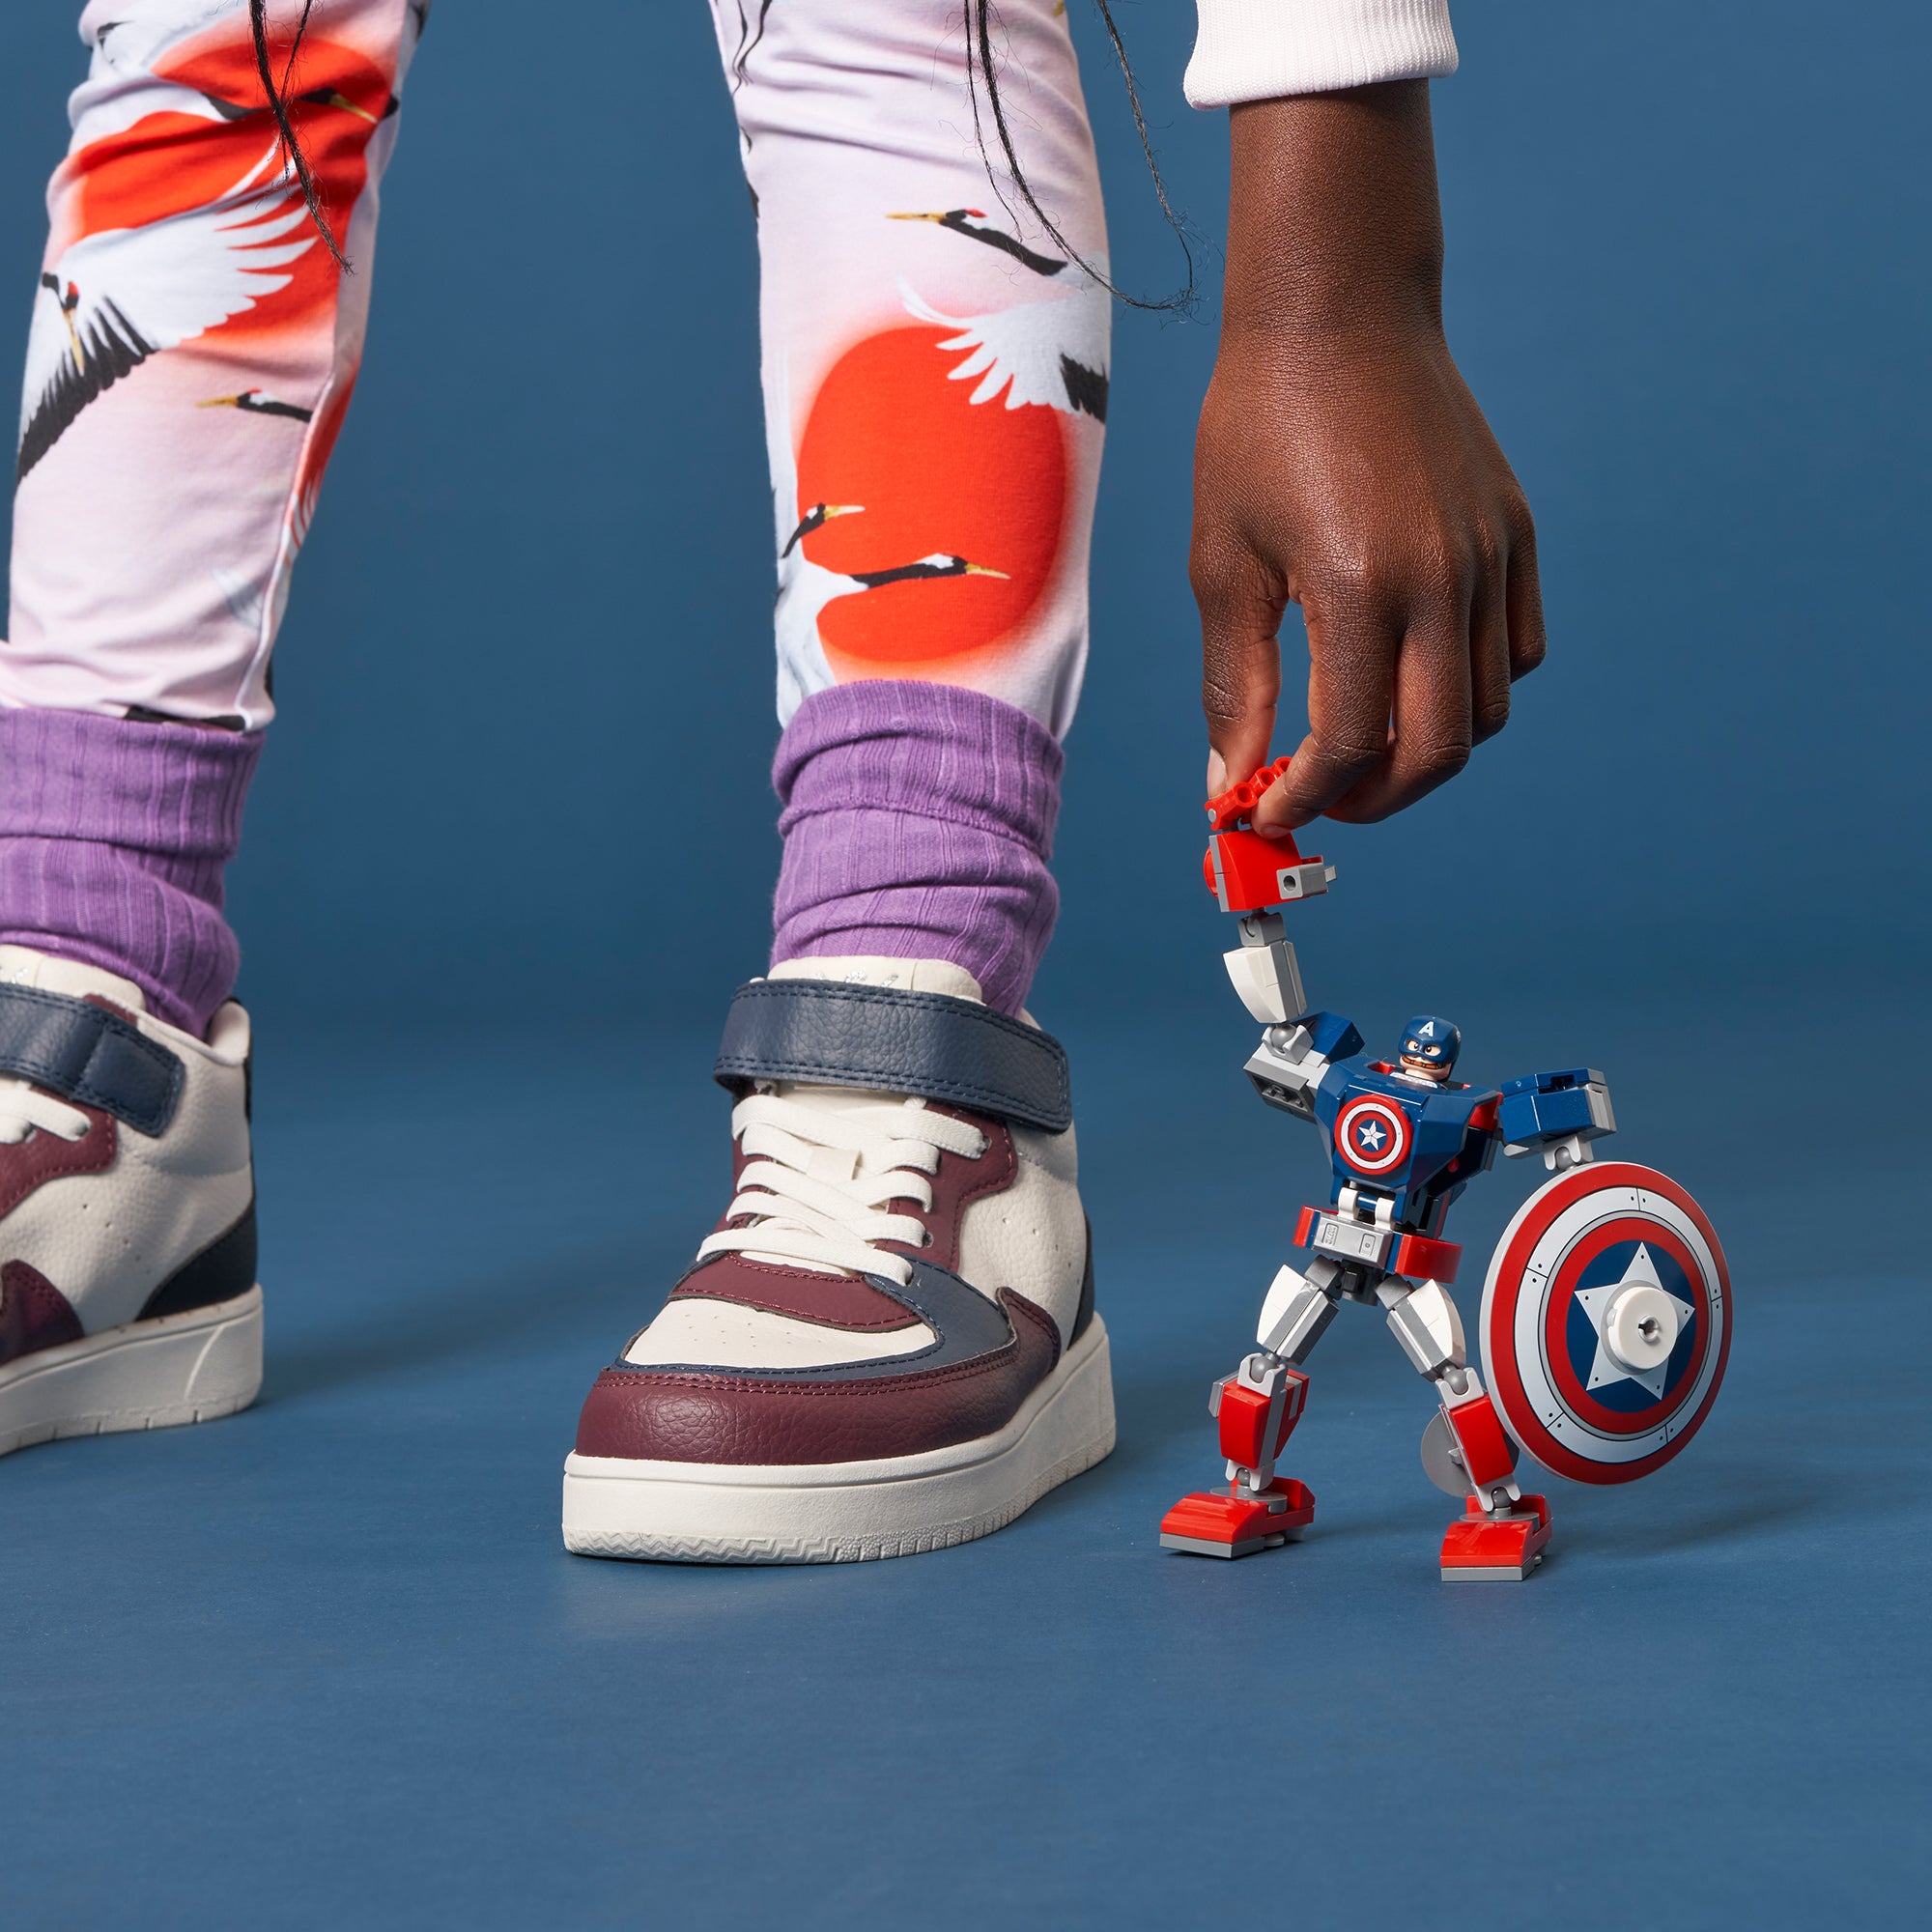 LEGO® Marvel Avengers Captain America Mech Toy 76168 Default Title